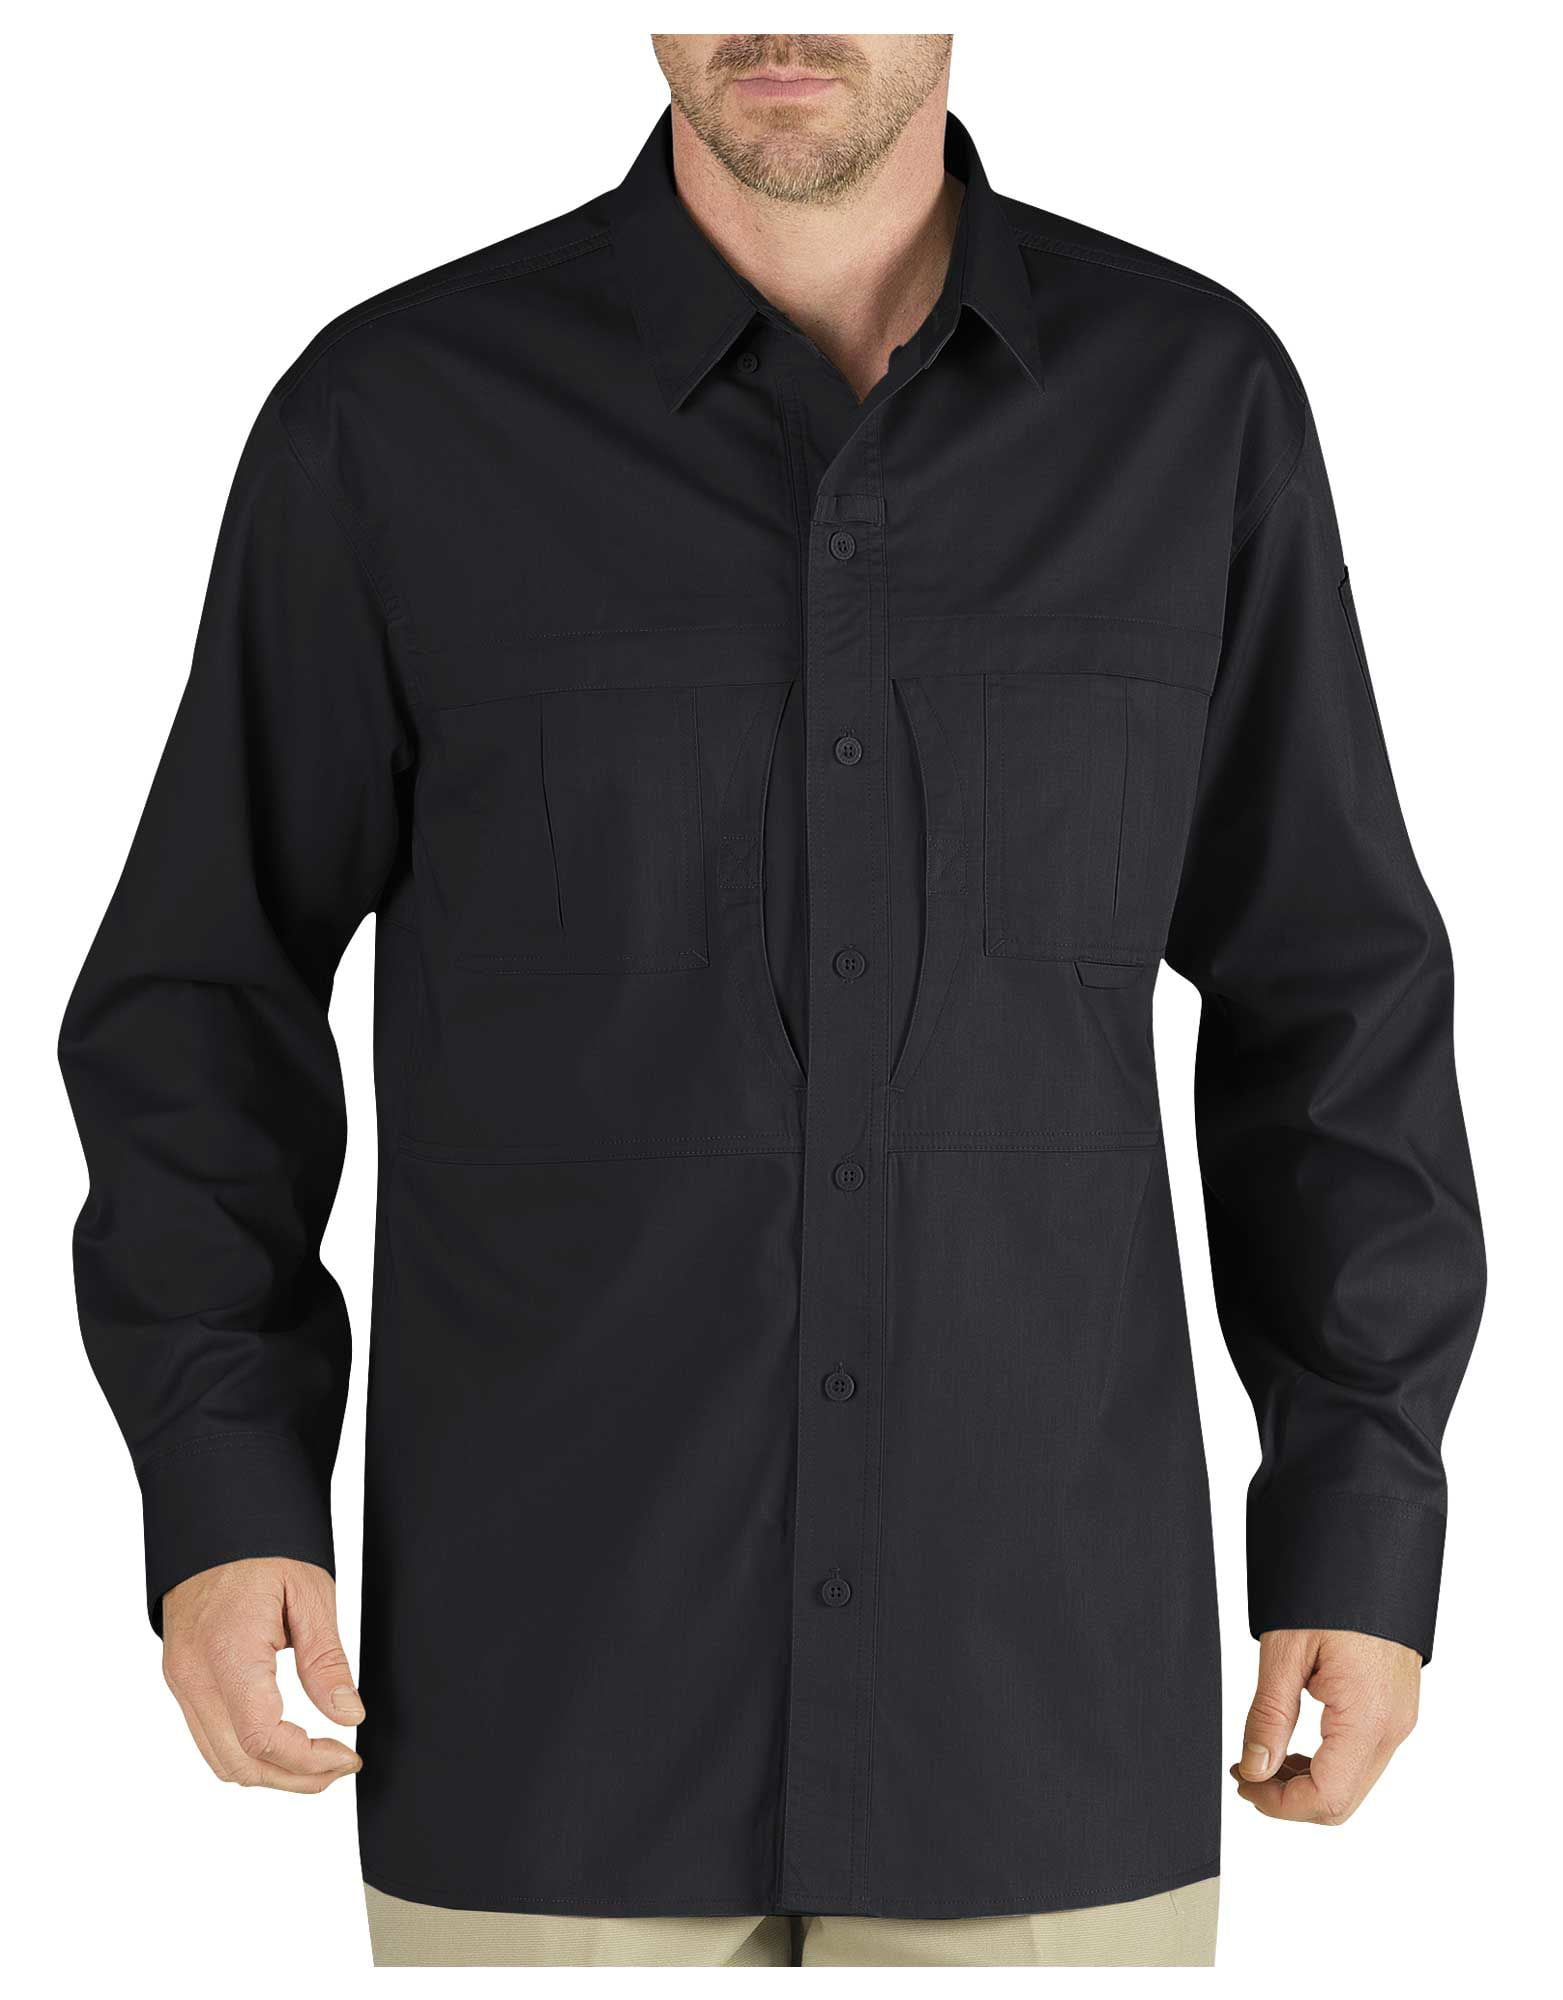 LL950 - Dickies LJ950 Men's Black Tactical Long Sleeve Shirt - Size ...